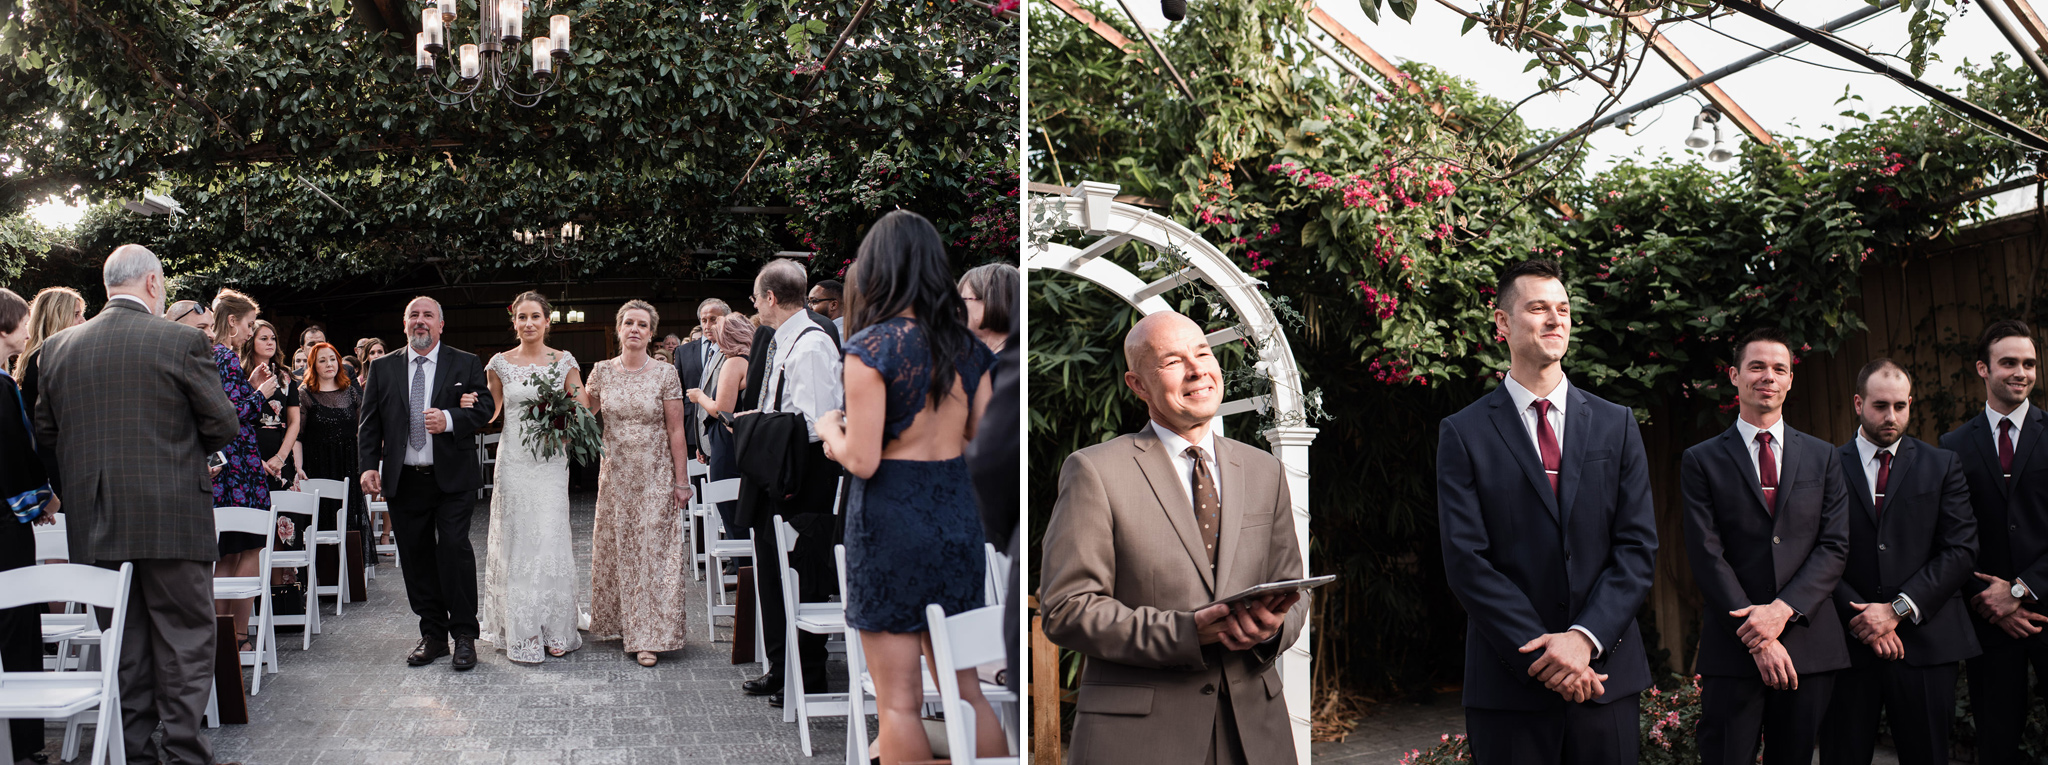 016-groom-seeing-bride-madsens-greenhouse-wedding-toronto-photographer.jpg